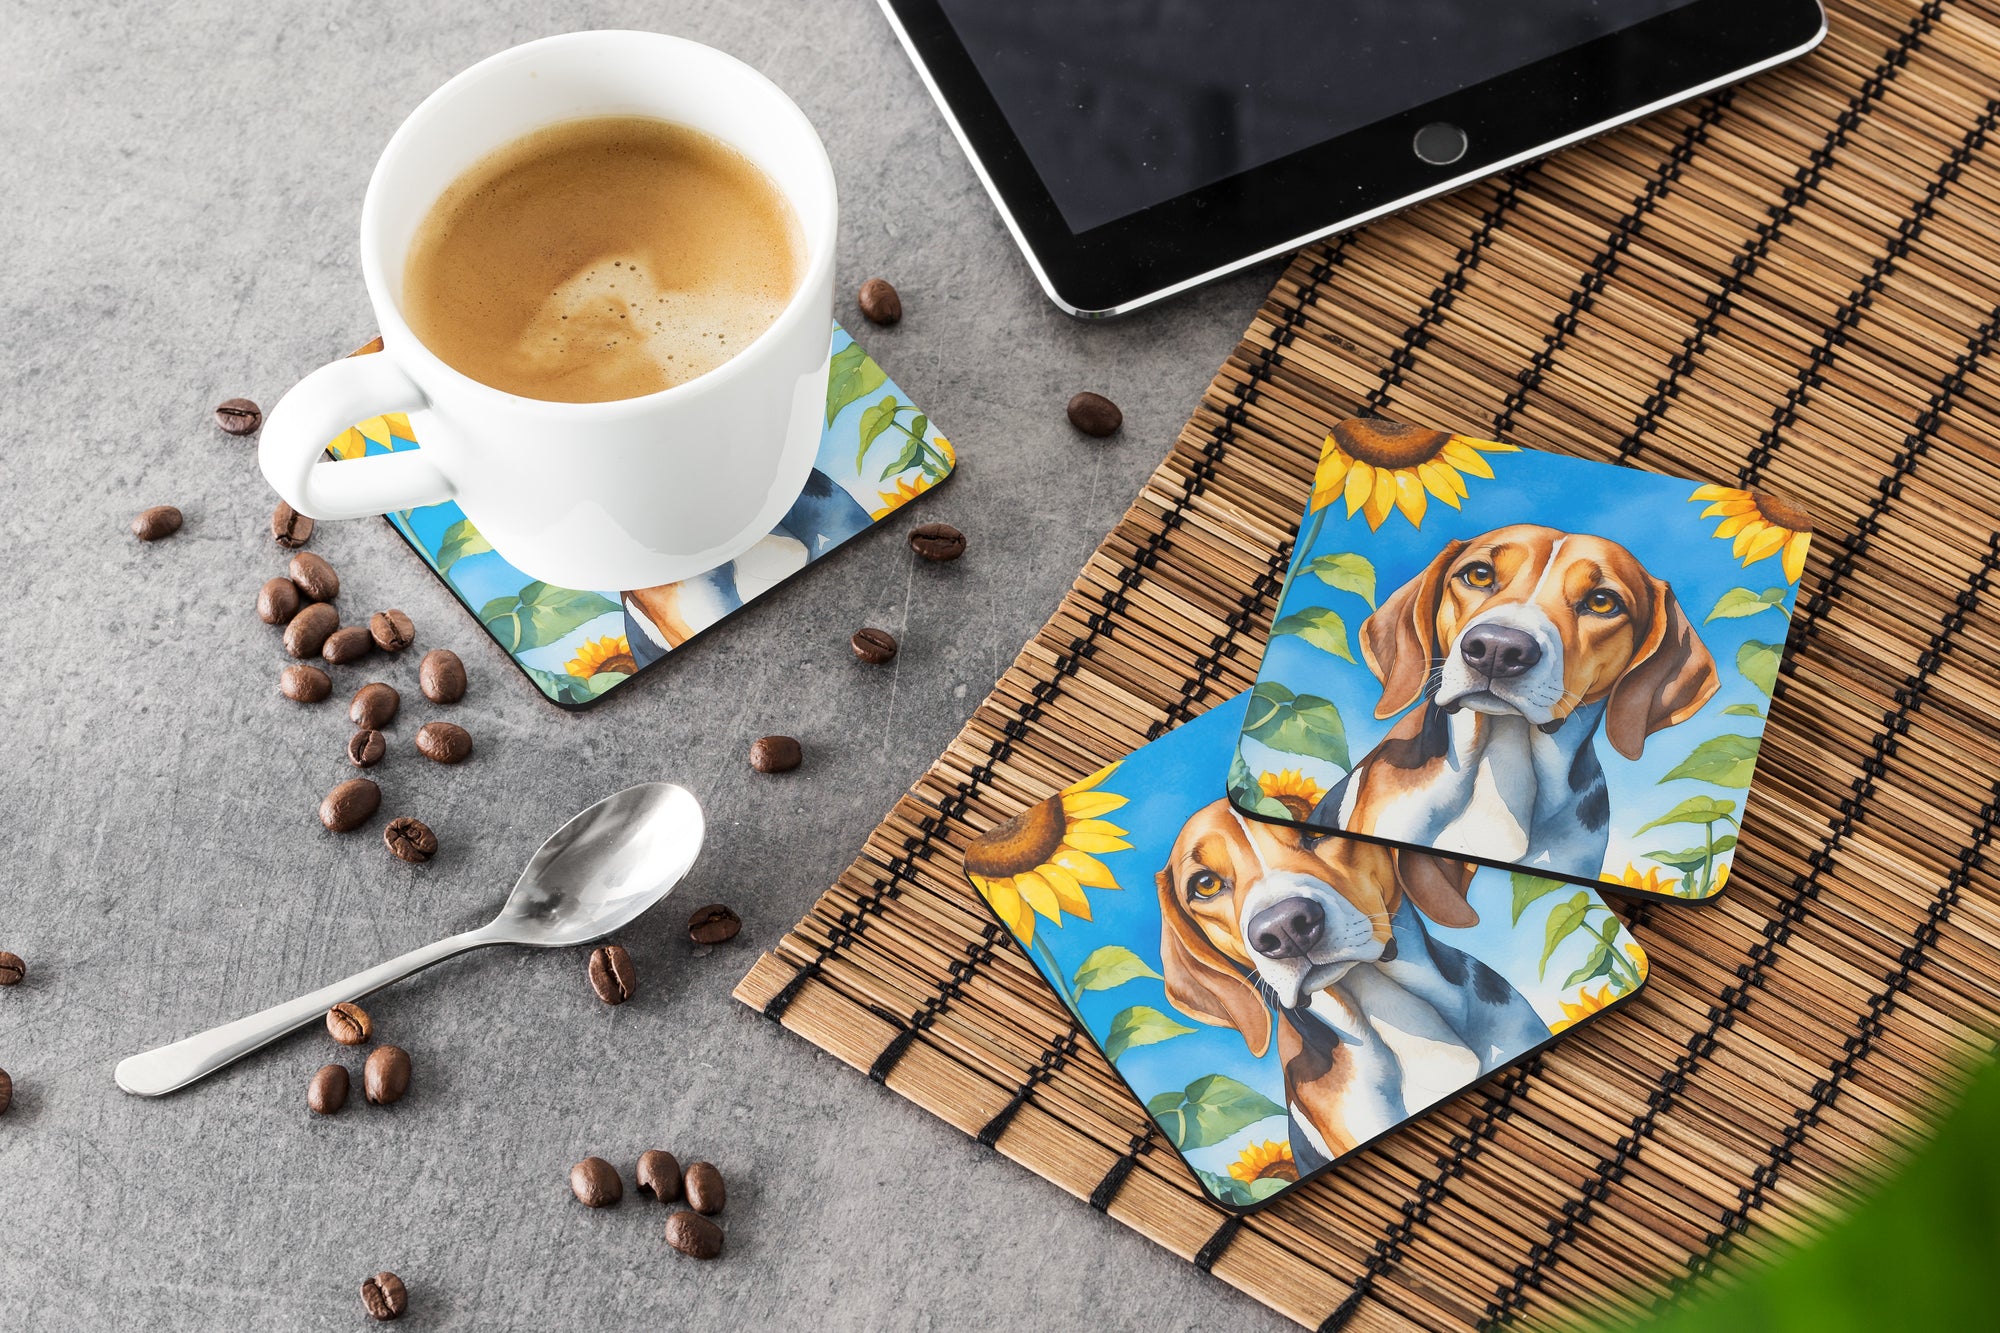 American Foxhound in Sunflowers Foam Coasters